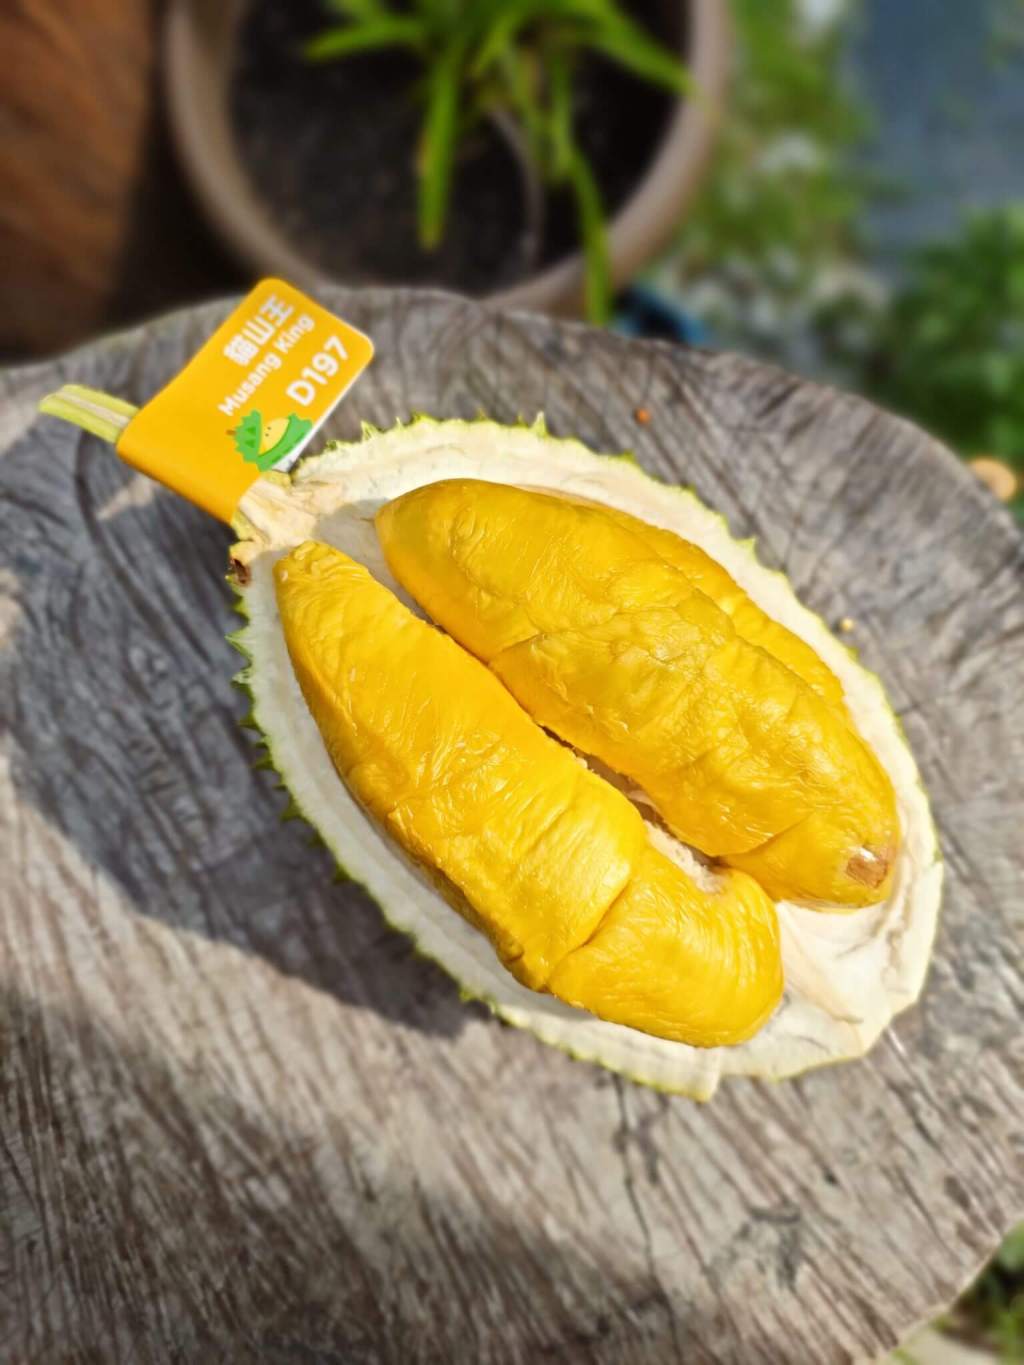 D197 musang king durian with buttery golden yellow flesh